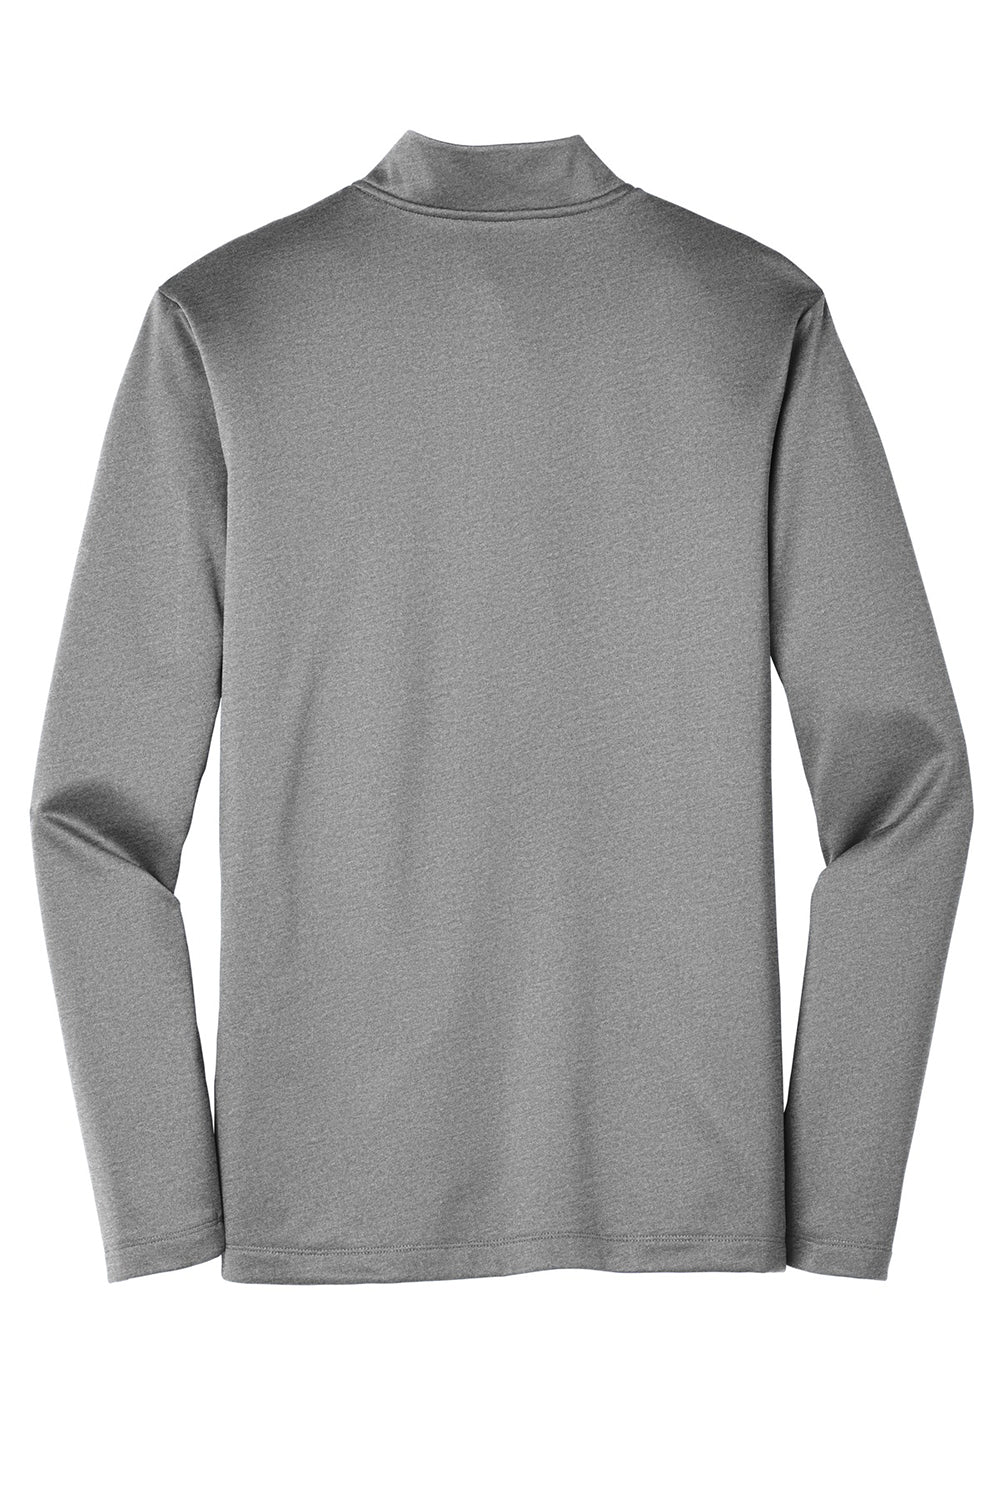 Nike NKAH6418 Mens Therma-Fit Moisture Wicking Fleece Full Zip Sweatshirt Heather Dark Grey Flat Back